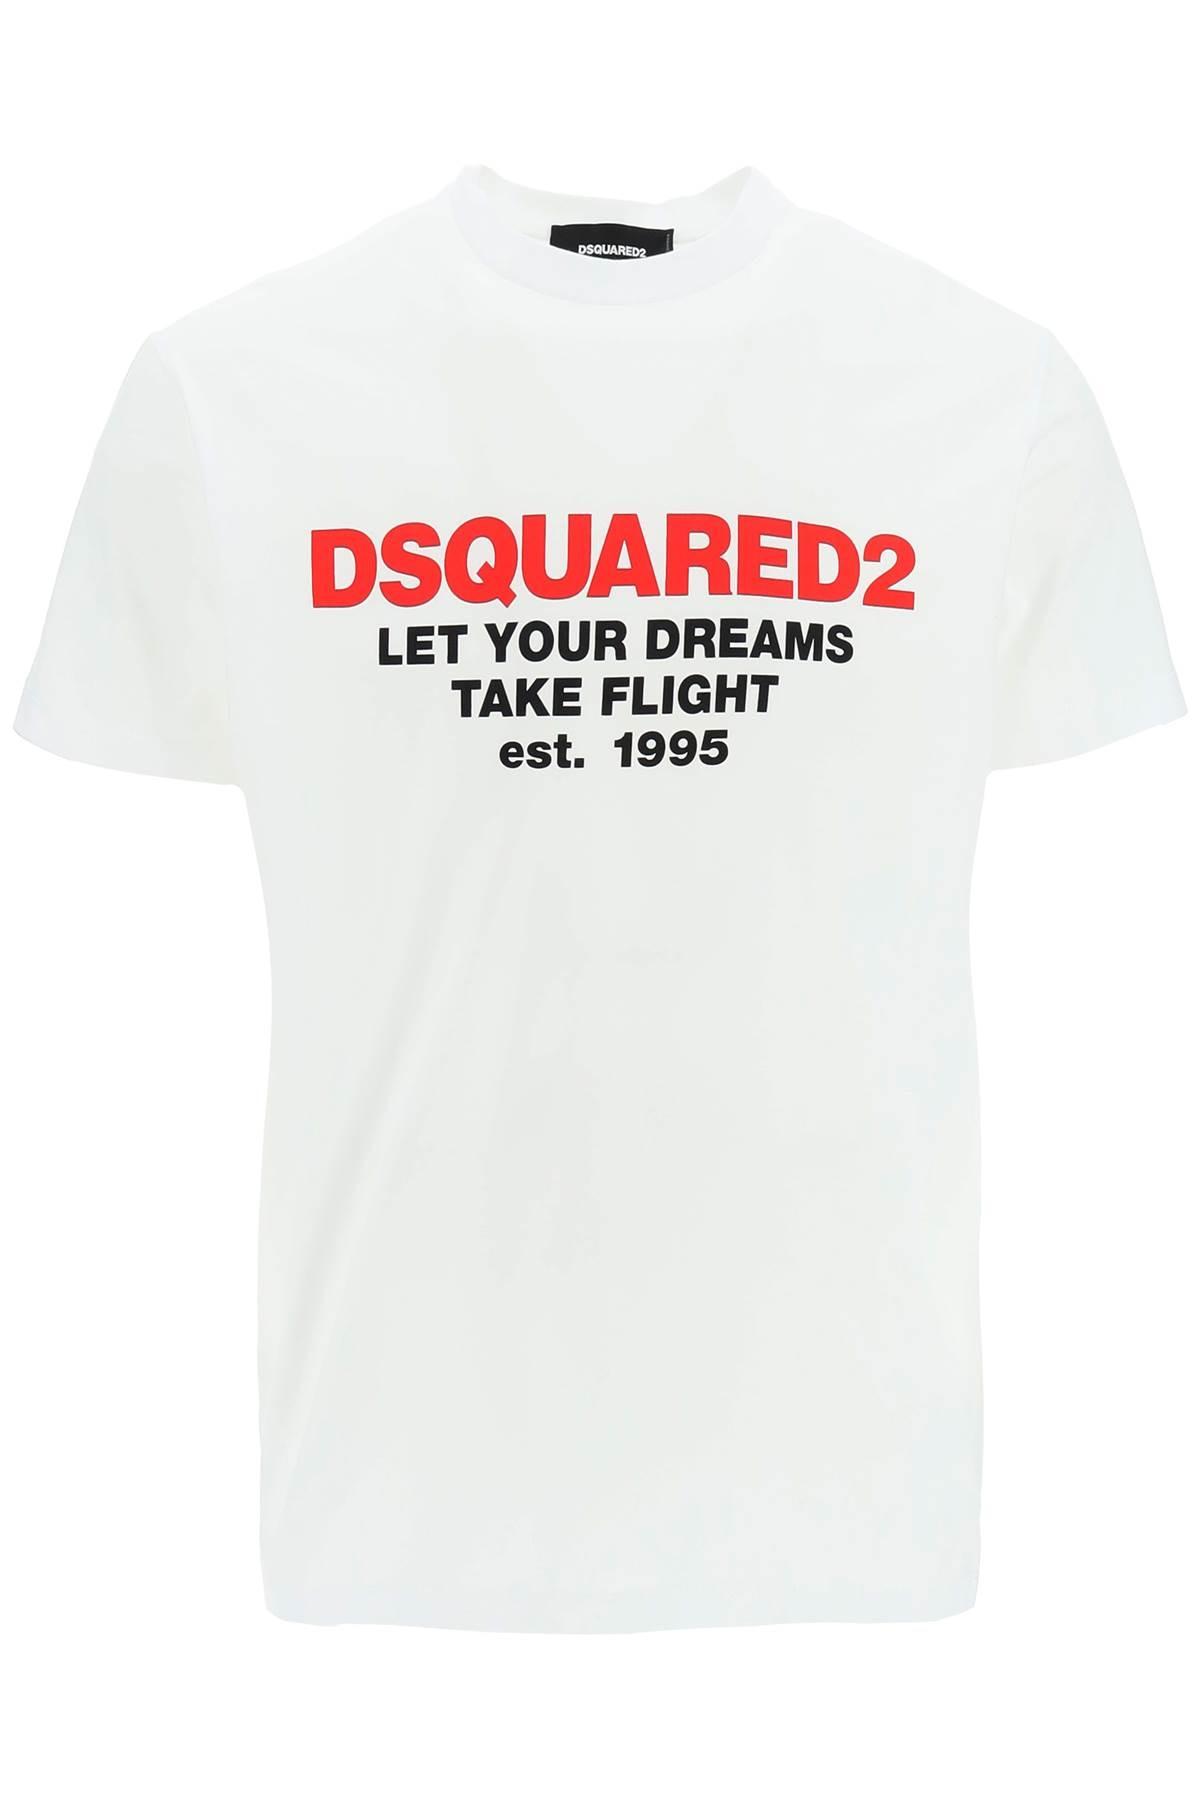 DSquared² Dream Flight Print Cool Tee in White for Men | Lyst